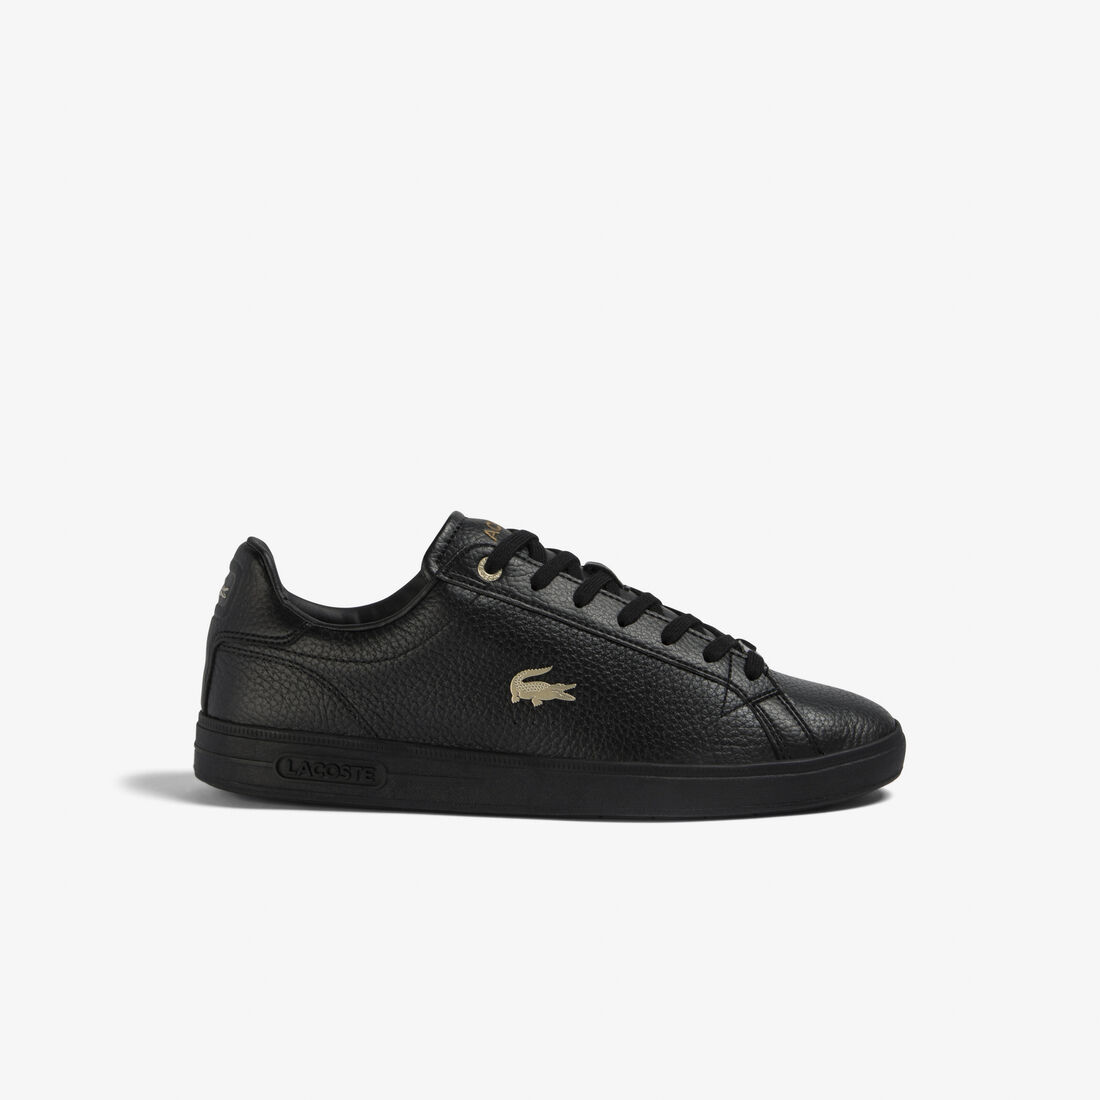 Lacoste Graduate Pro Leather Men's Sneakers Black | 907-LTPSQR